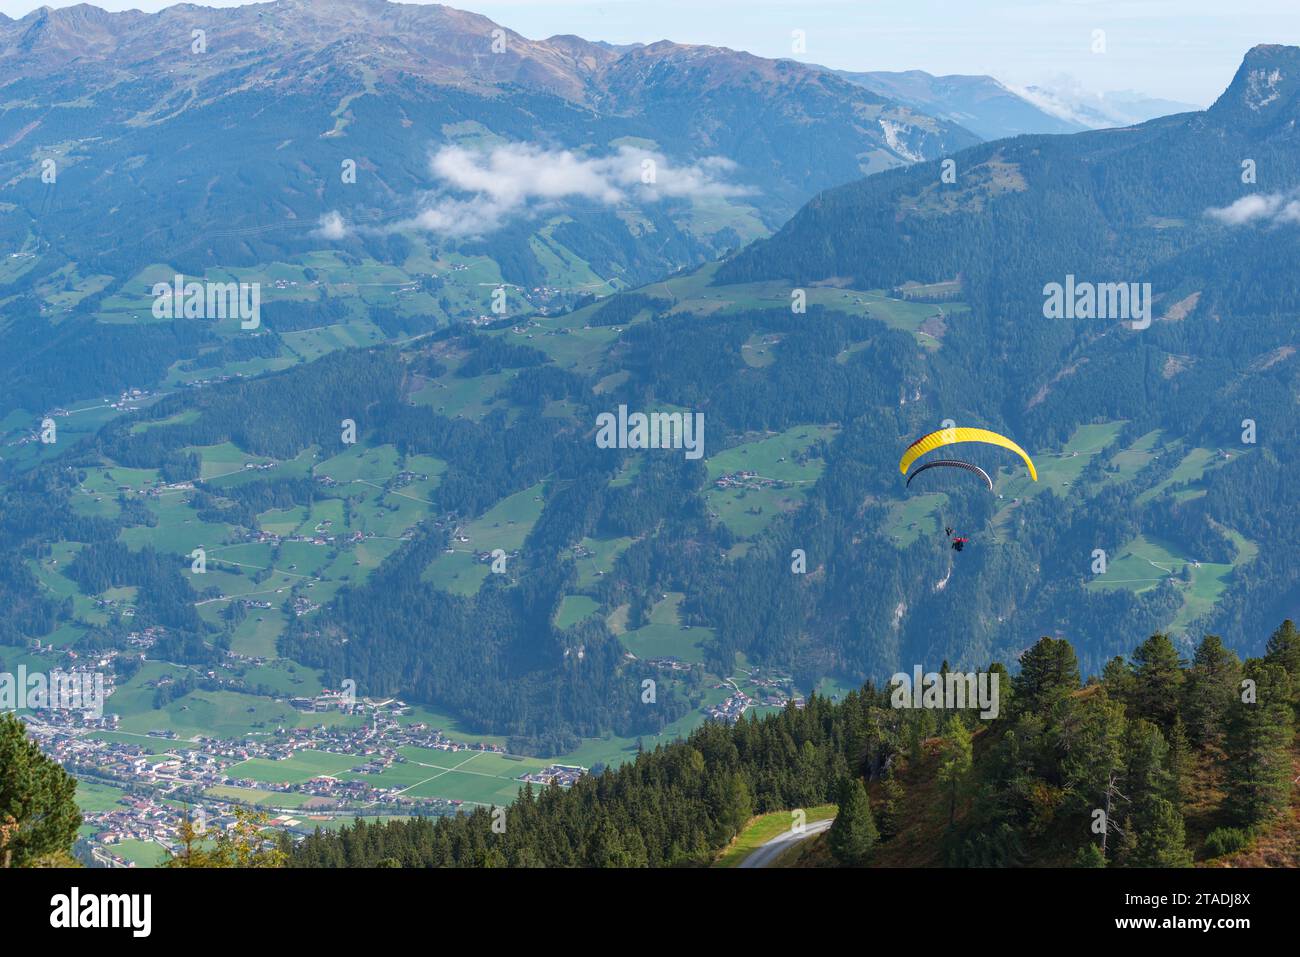 Voli in parapendio dal Monte Penken (2095 m), parapendio tandem Mayrhofen, Alpi Zillertal, Tirolo, Austria Foto Stock